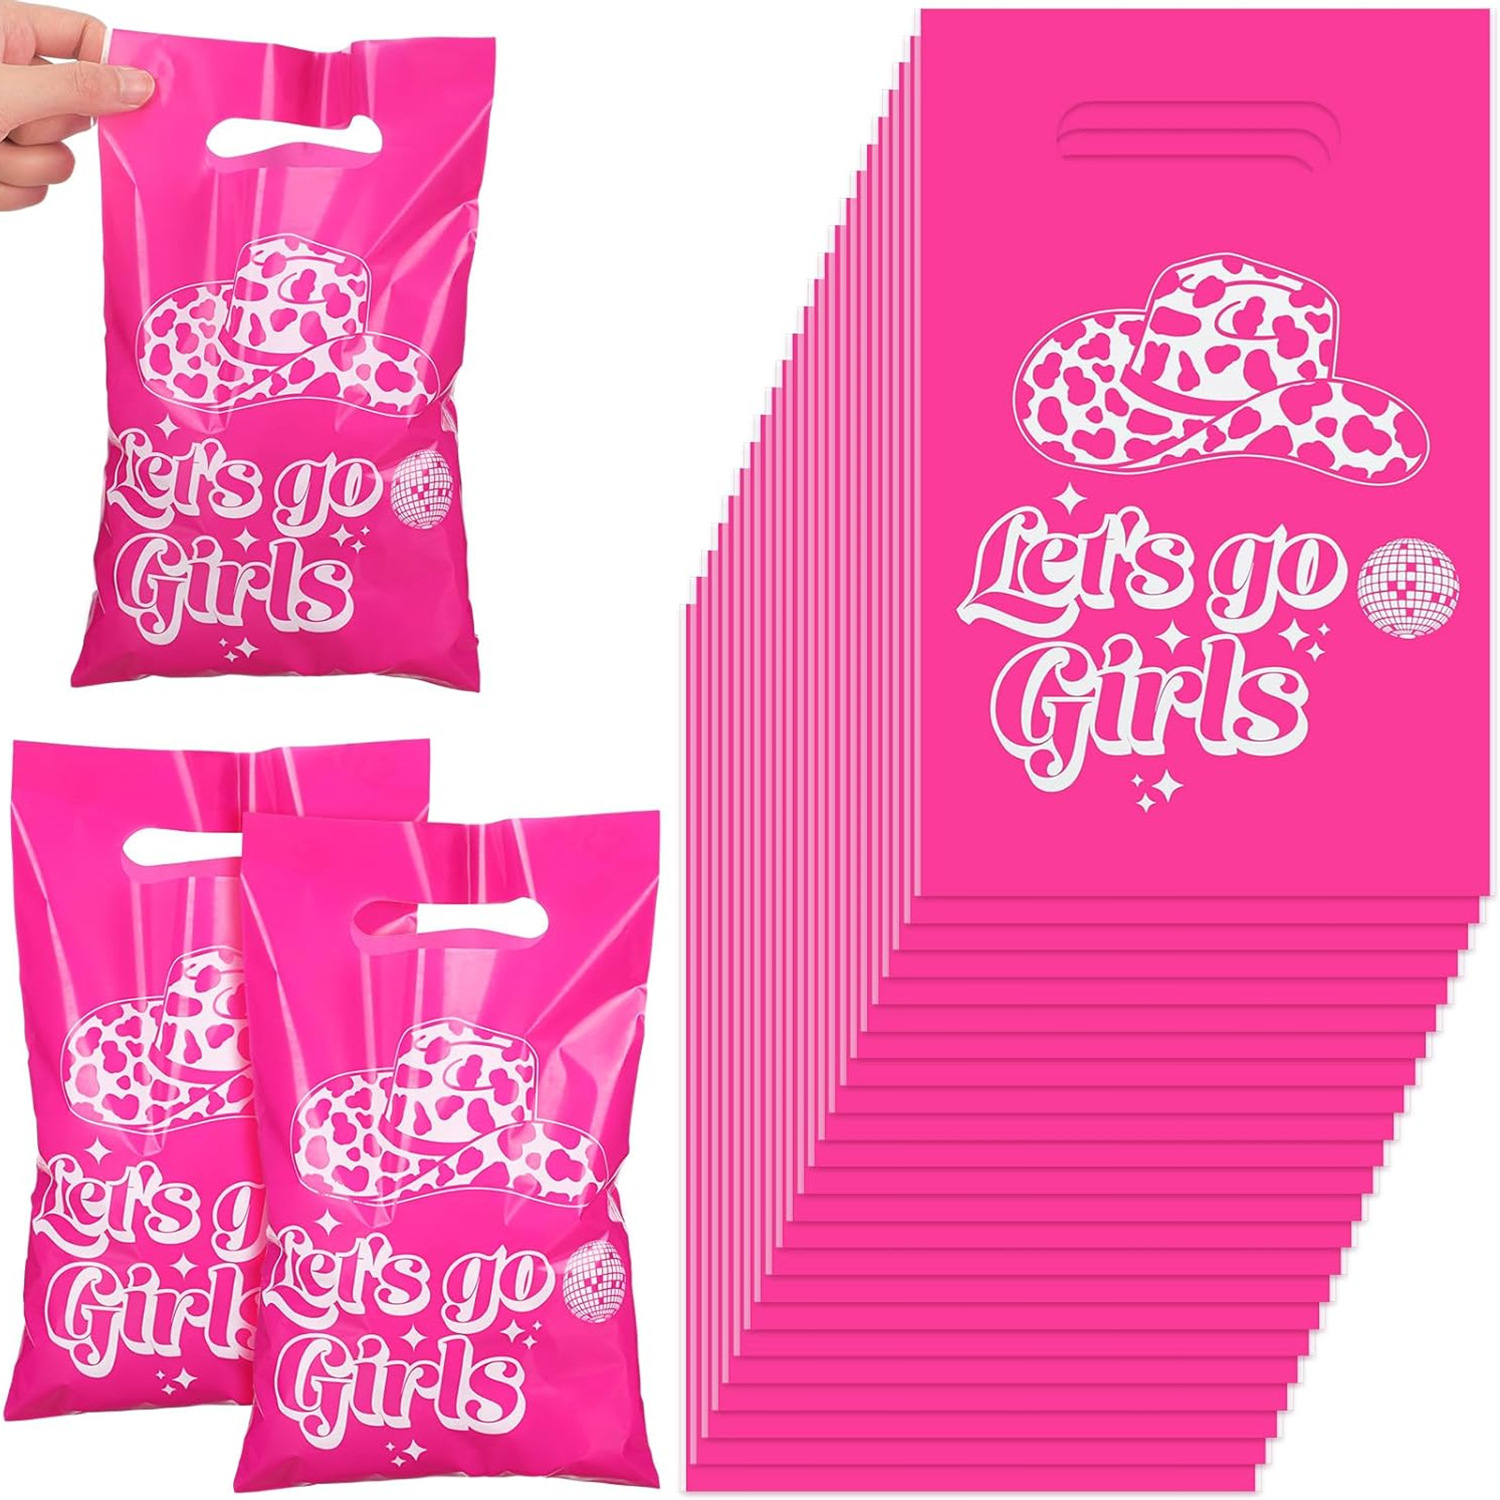 Let's Go Girls女孩派对礼品袋糖果袋 粉色牛仔帽生日派对回礼袋